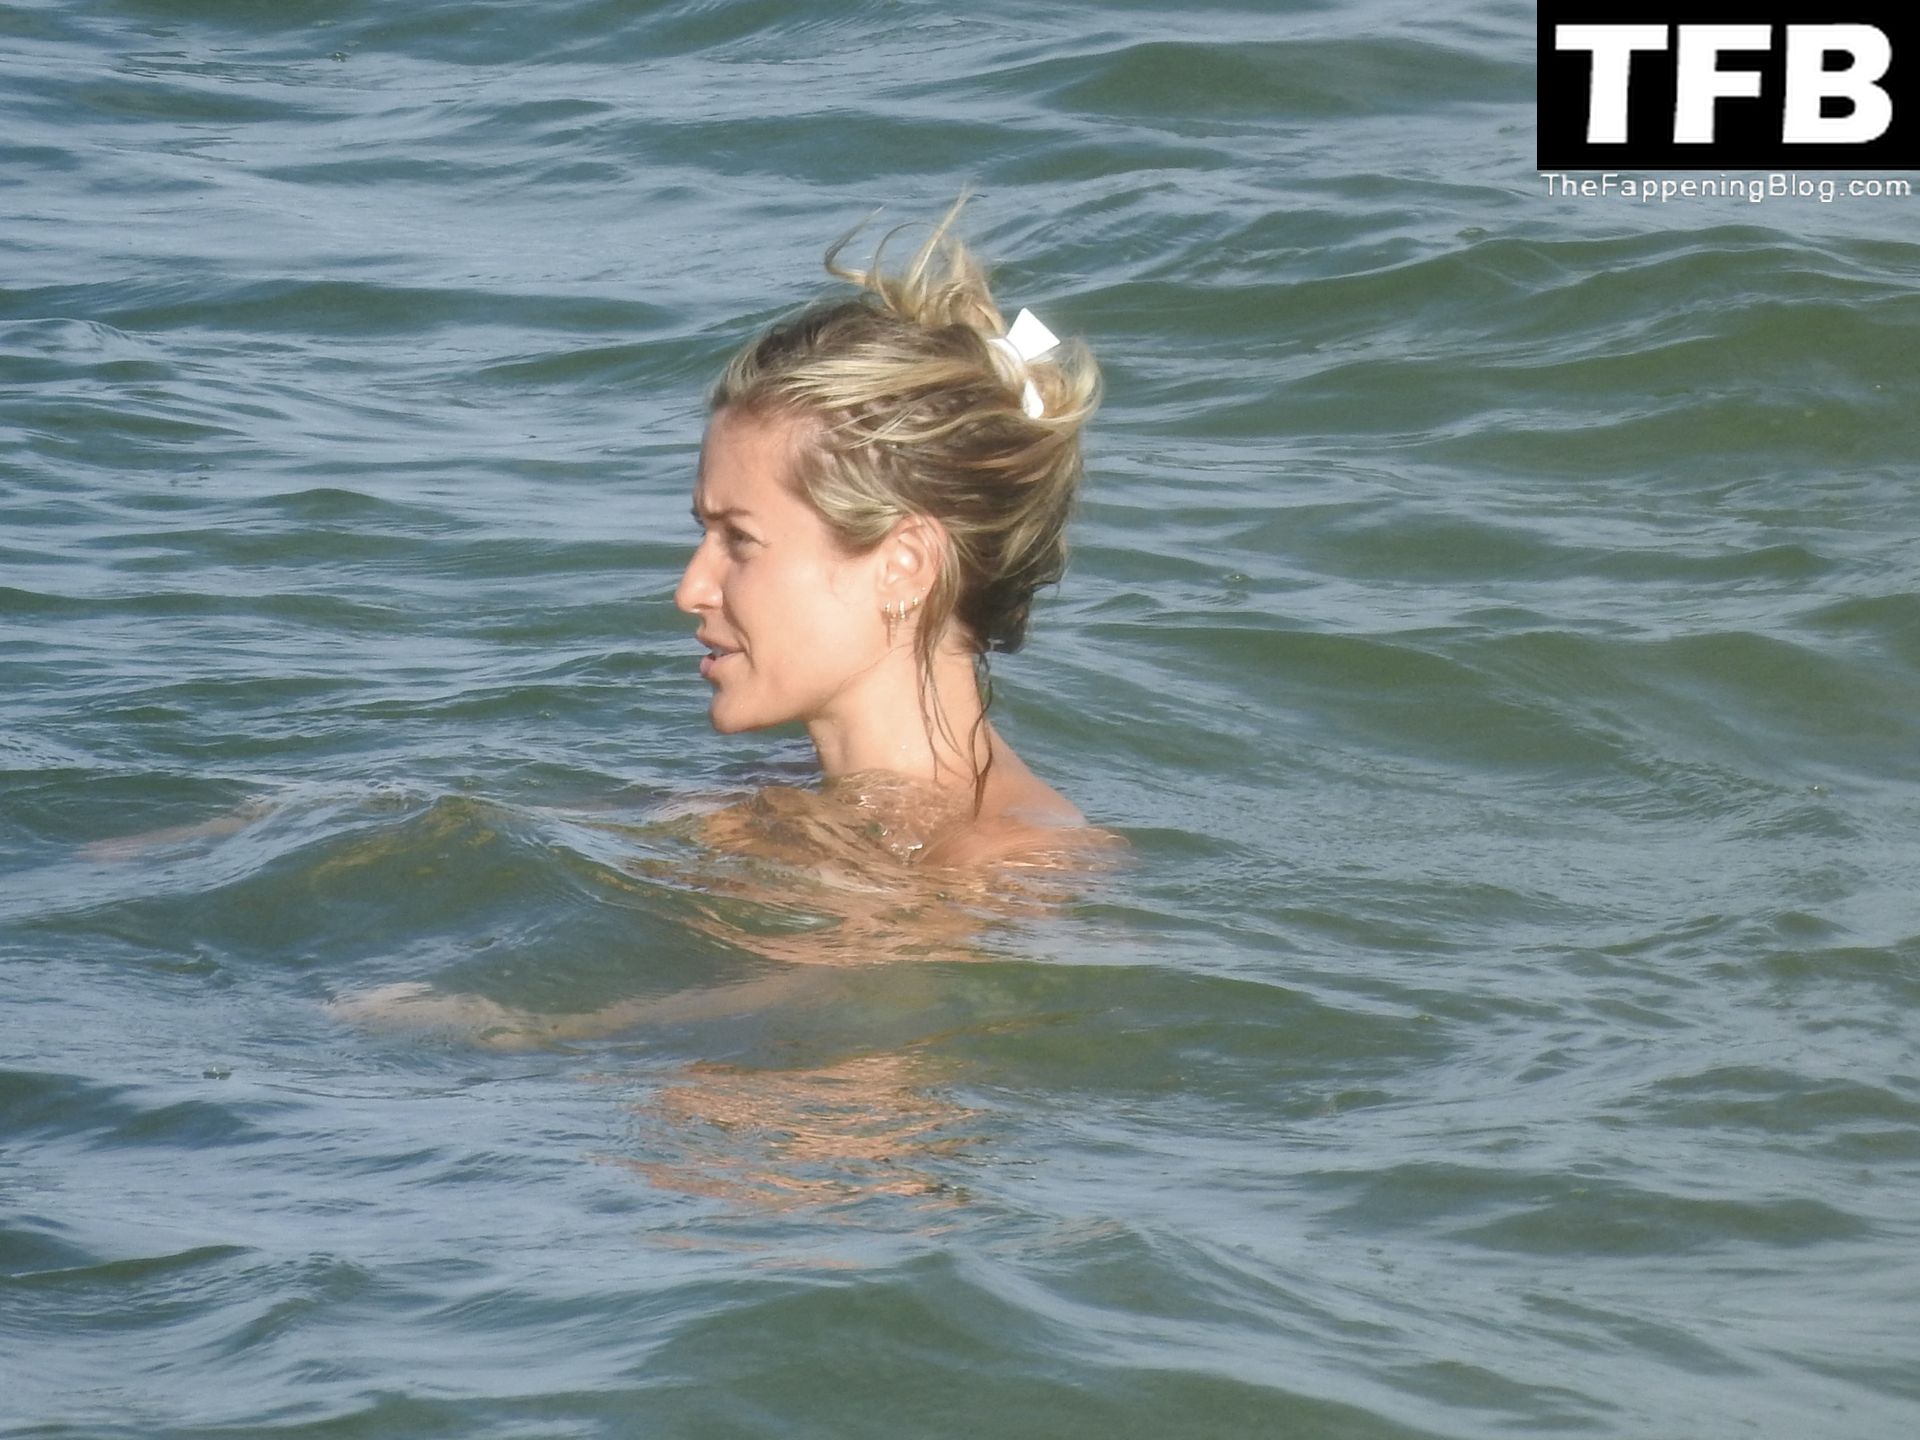 Kristin Cavallari Looks Incredible as She Takes a Dip in the Ocean in a White Bikini (66 Photos)